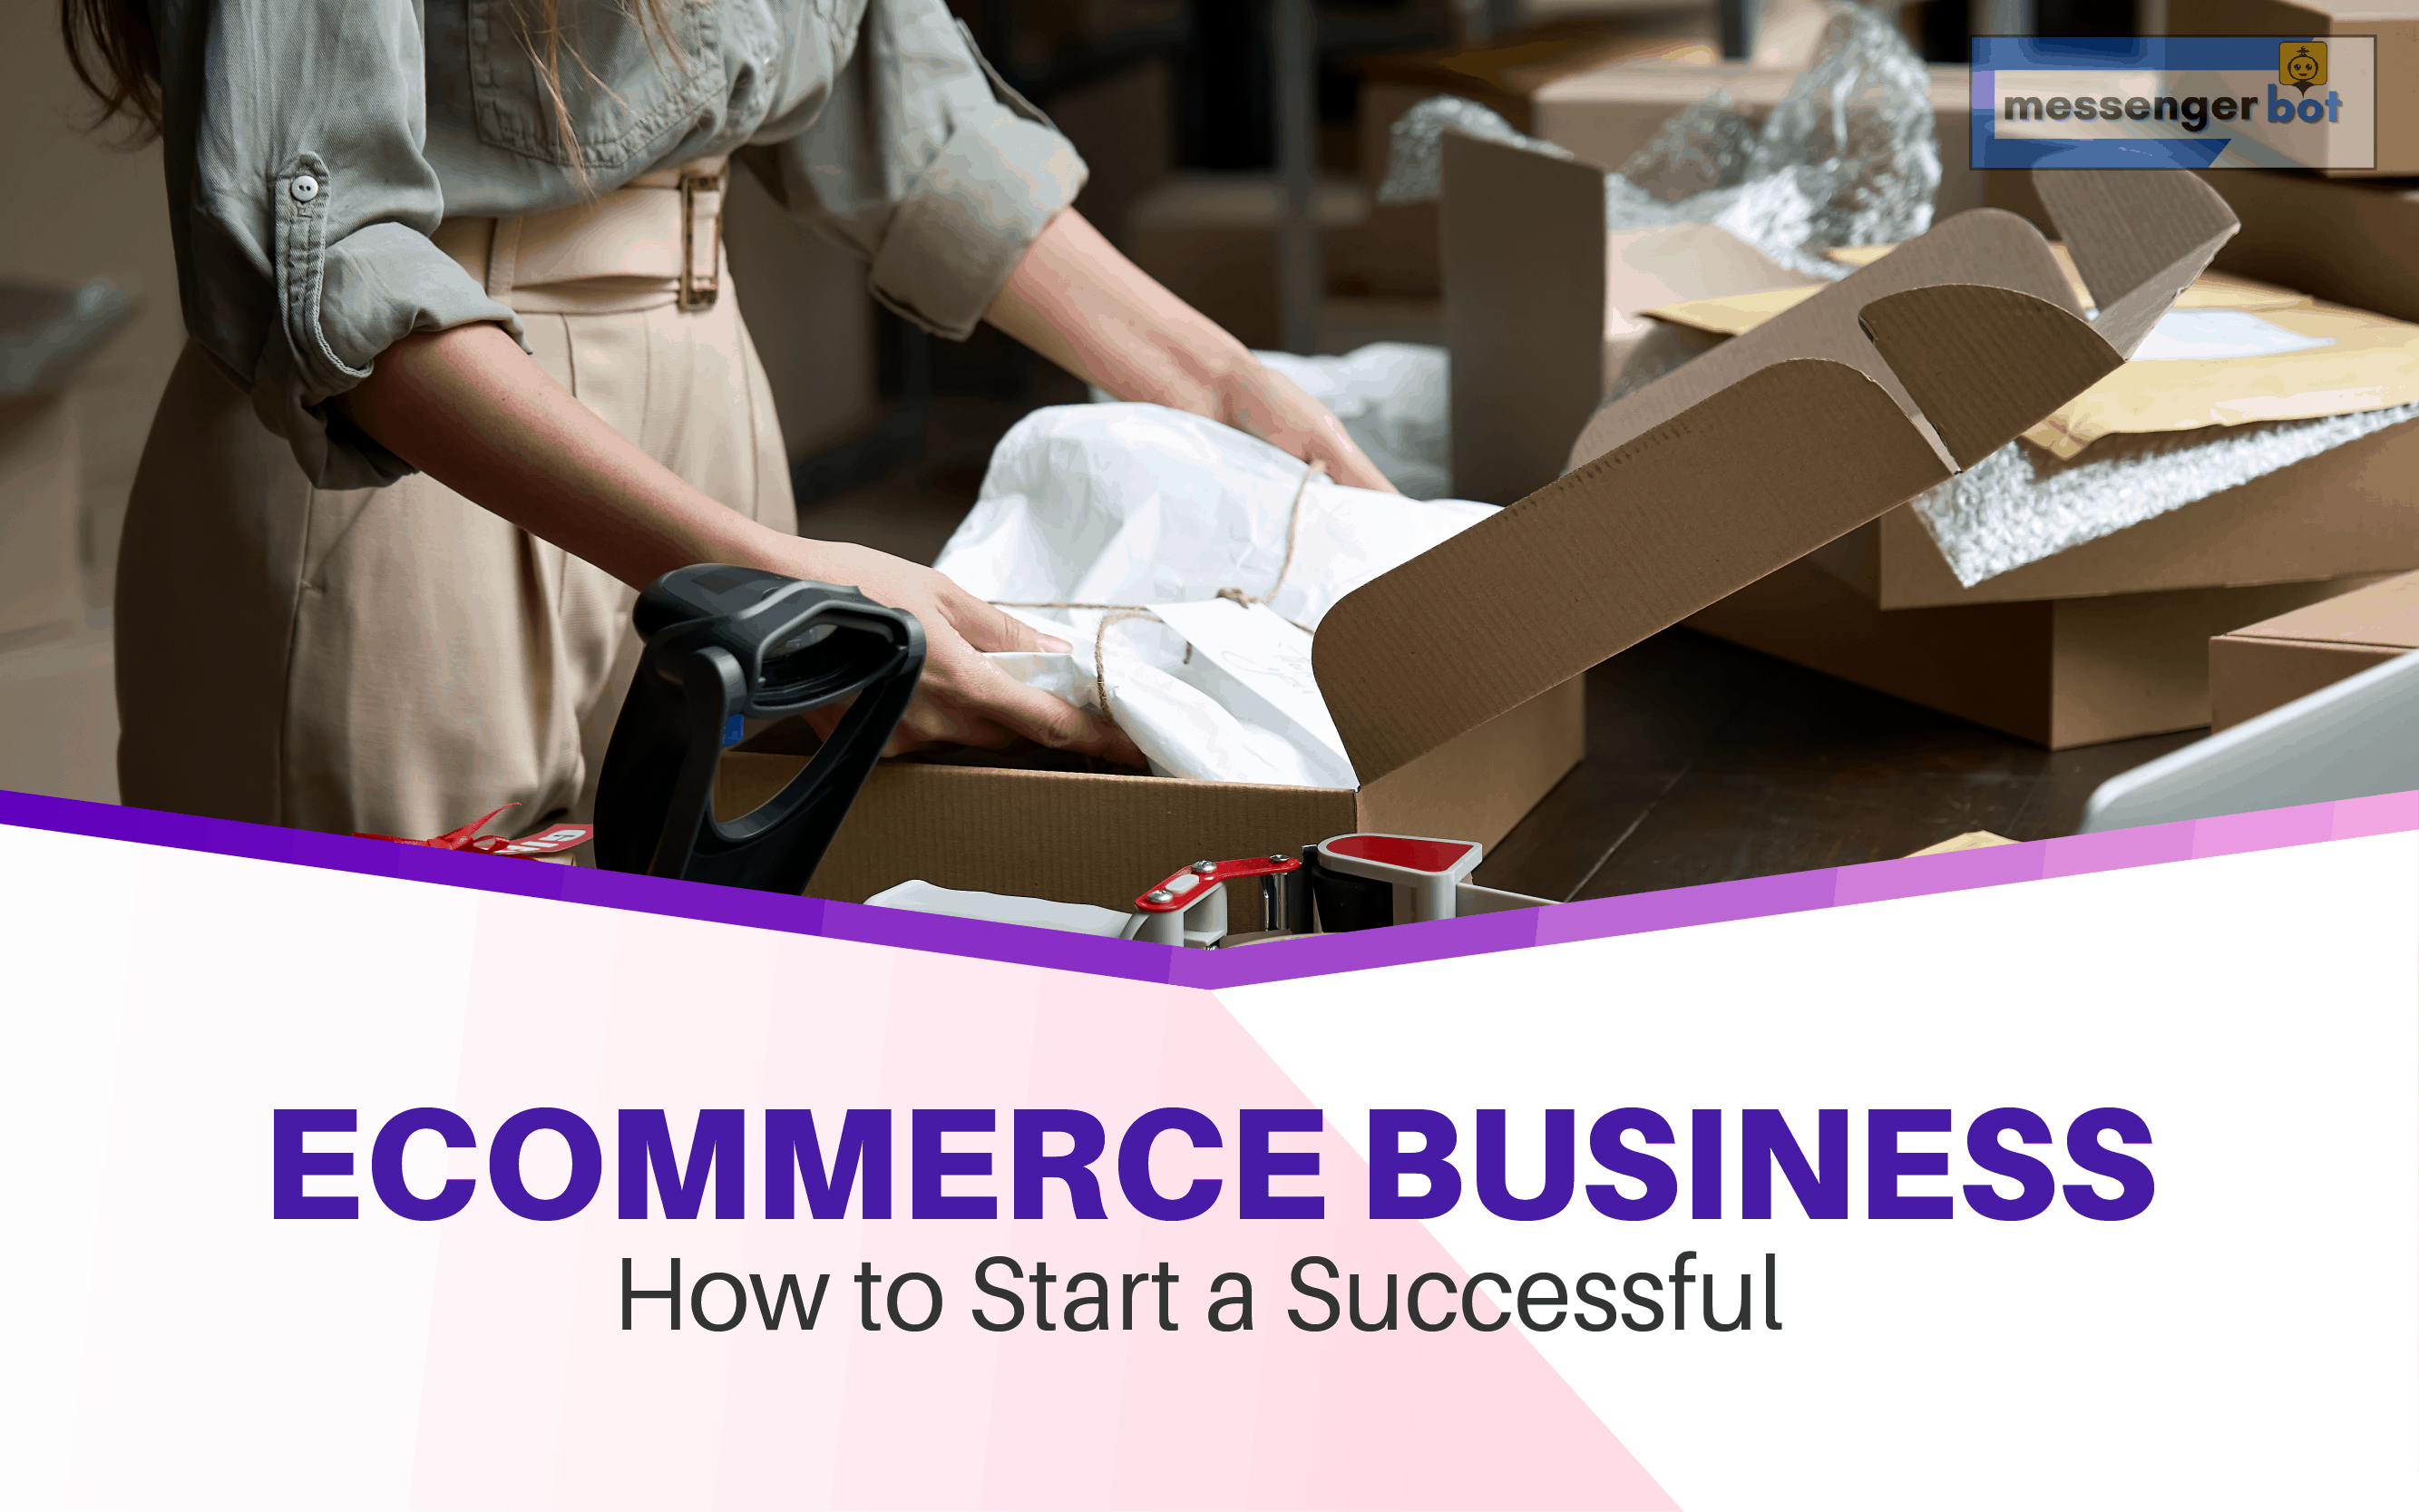 ecommerce business, e commerce,e commerce business, start an ecommerce business, online store